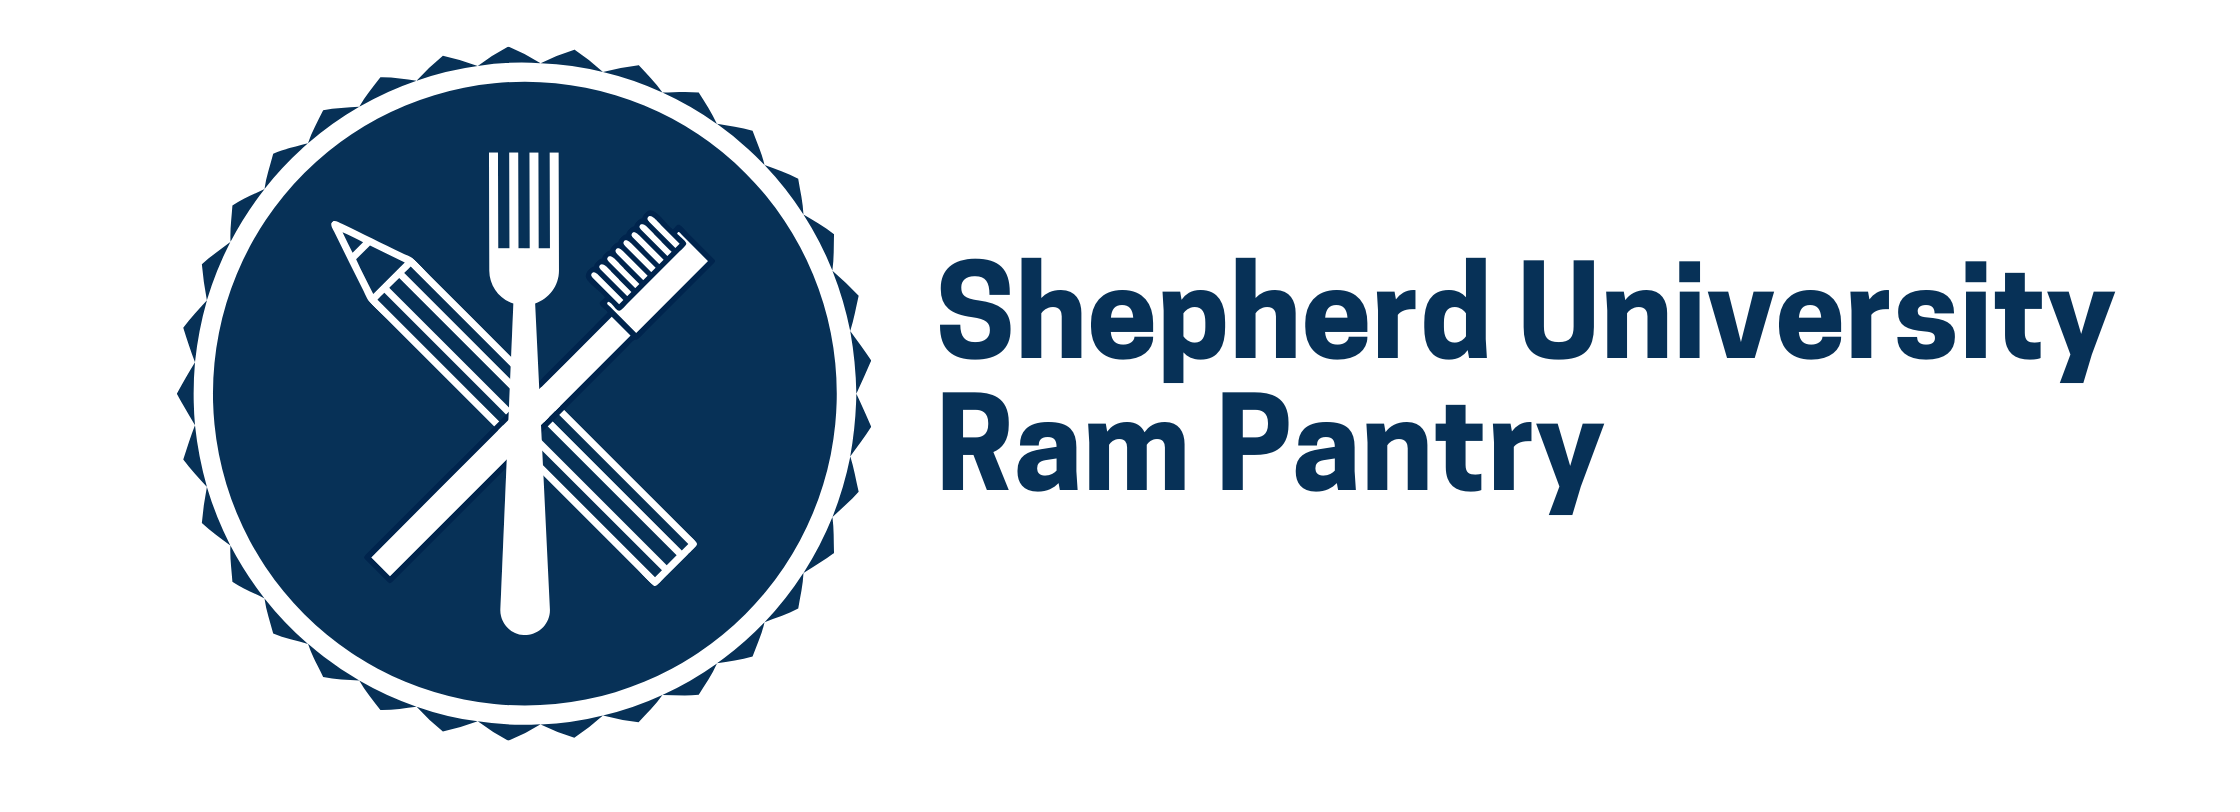 shepherd university ram pantry and logo